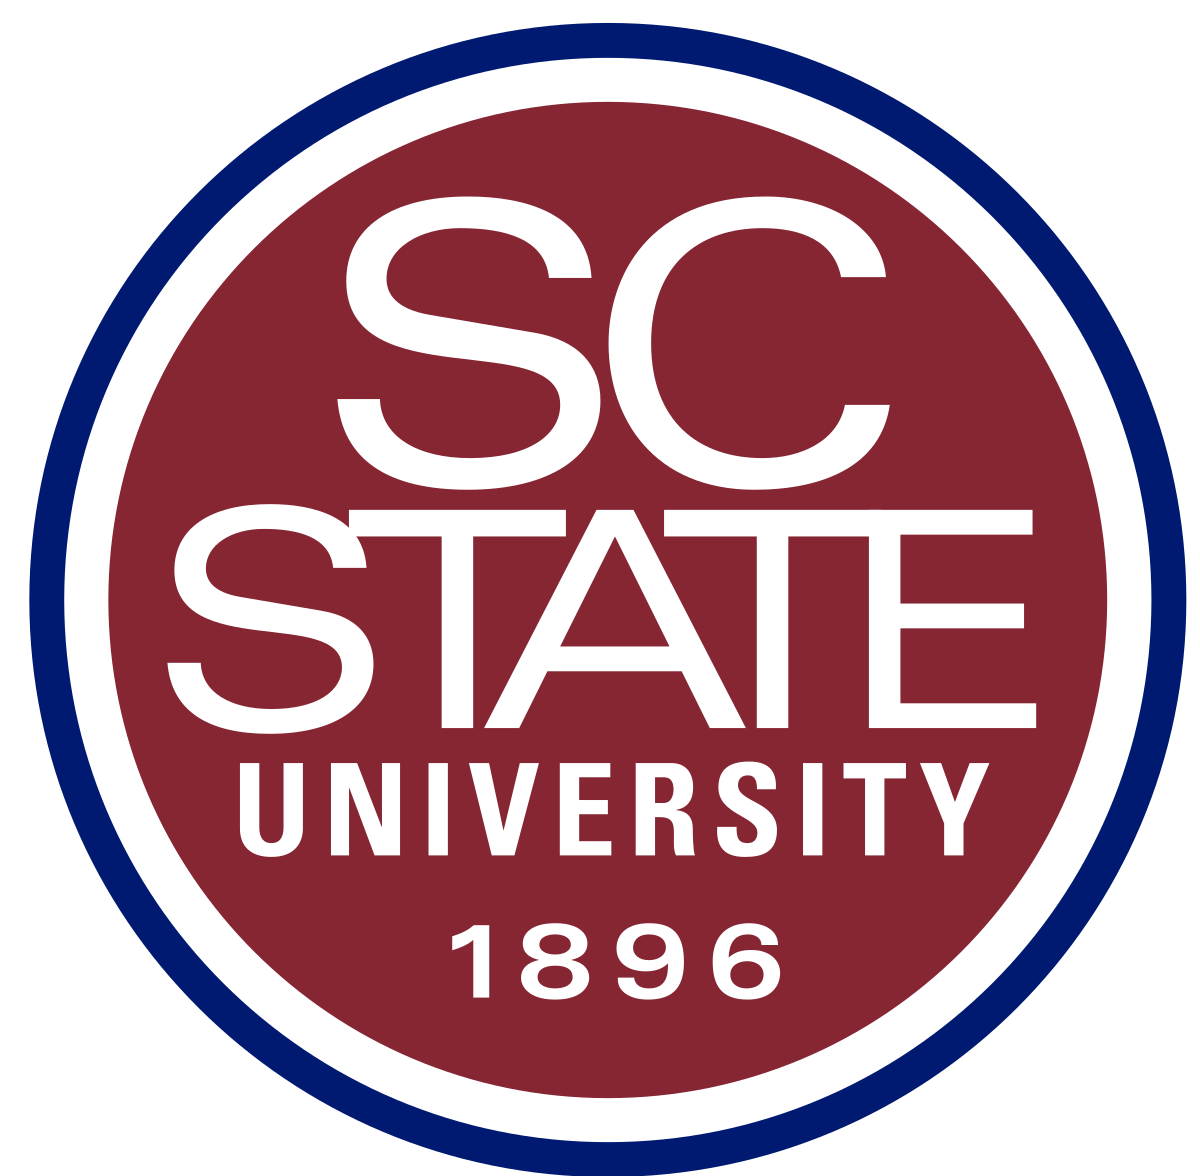 sc state university 1896